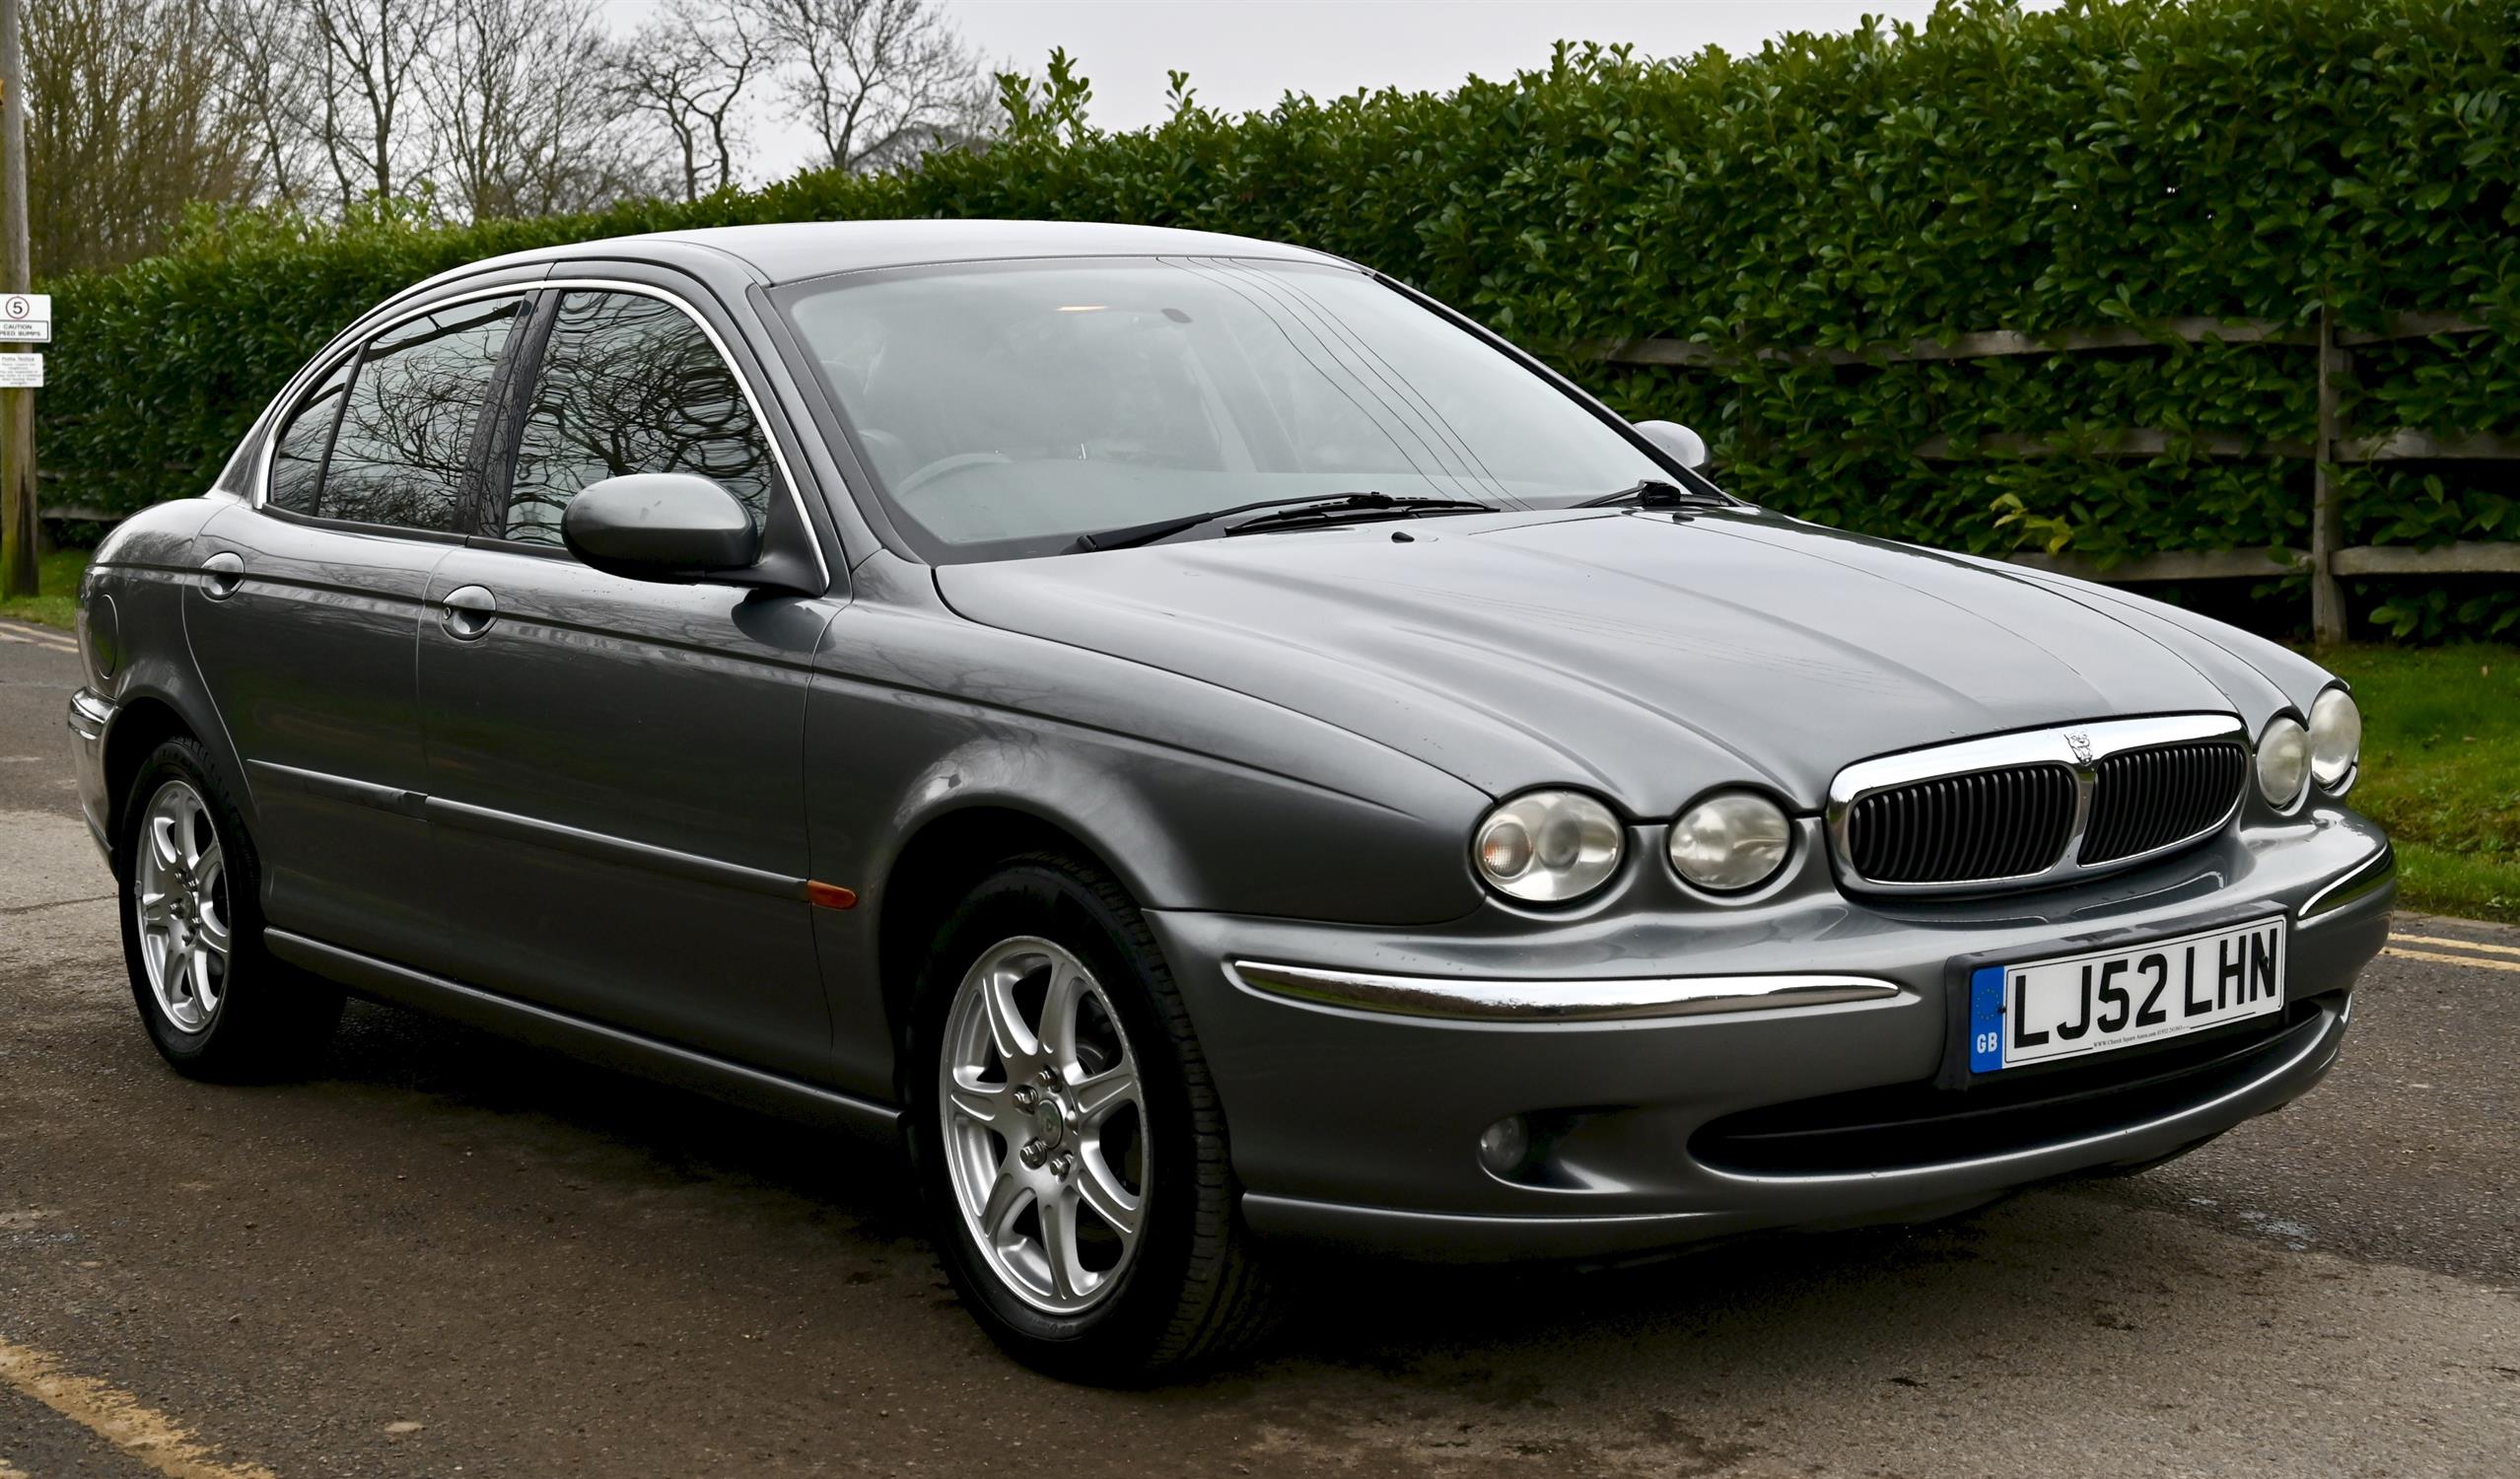 2002 Jaguar X-Type V6 Saloon. Registration number: LJ52 LHN Mileage: 94,400. Gunmetal Metallic